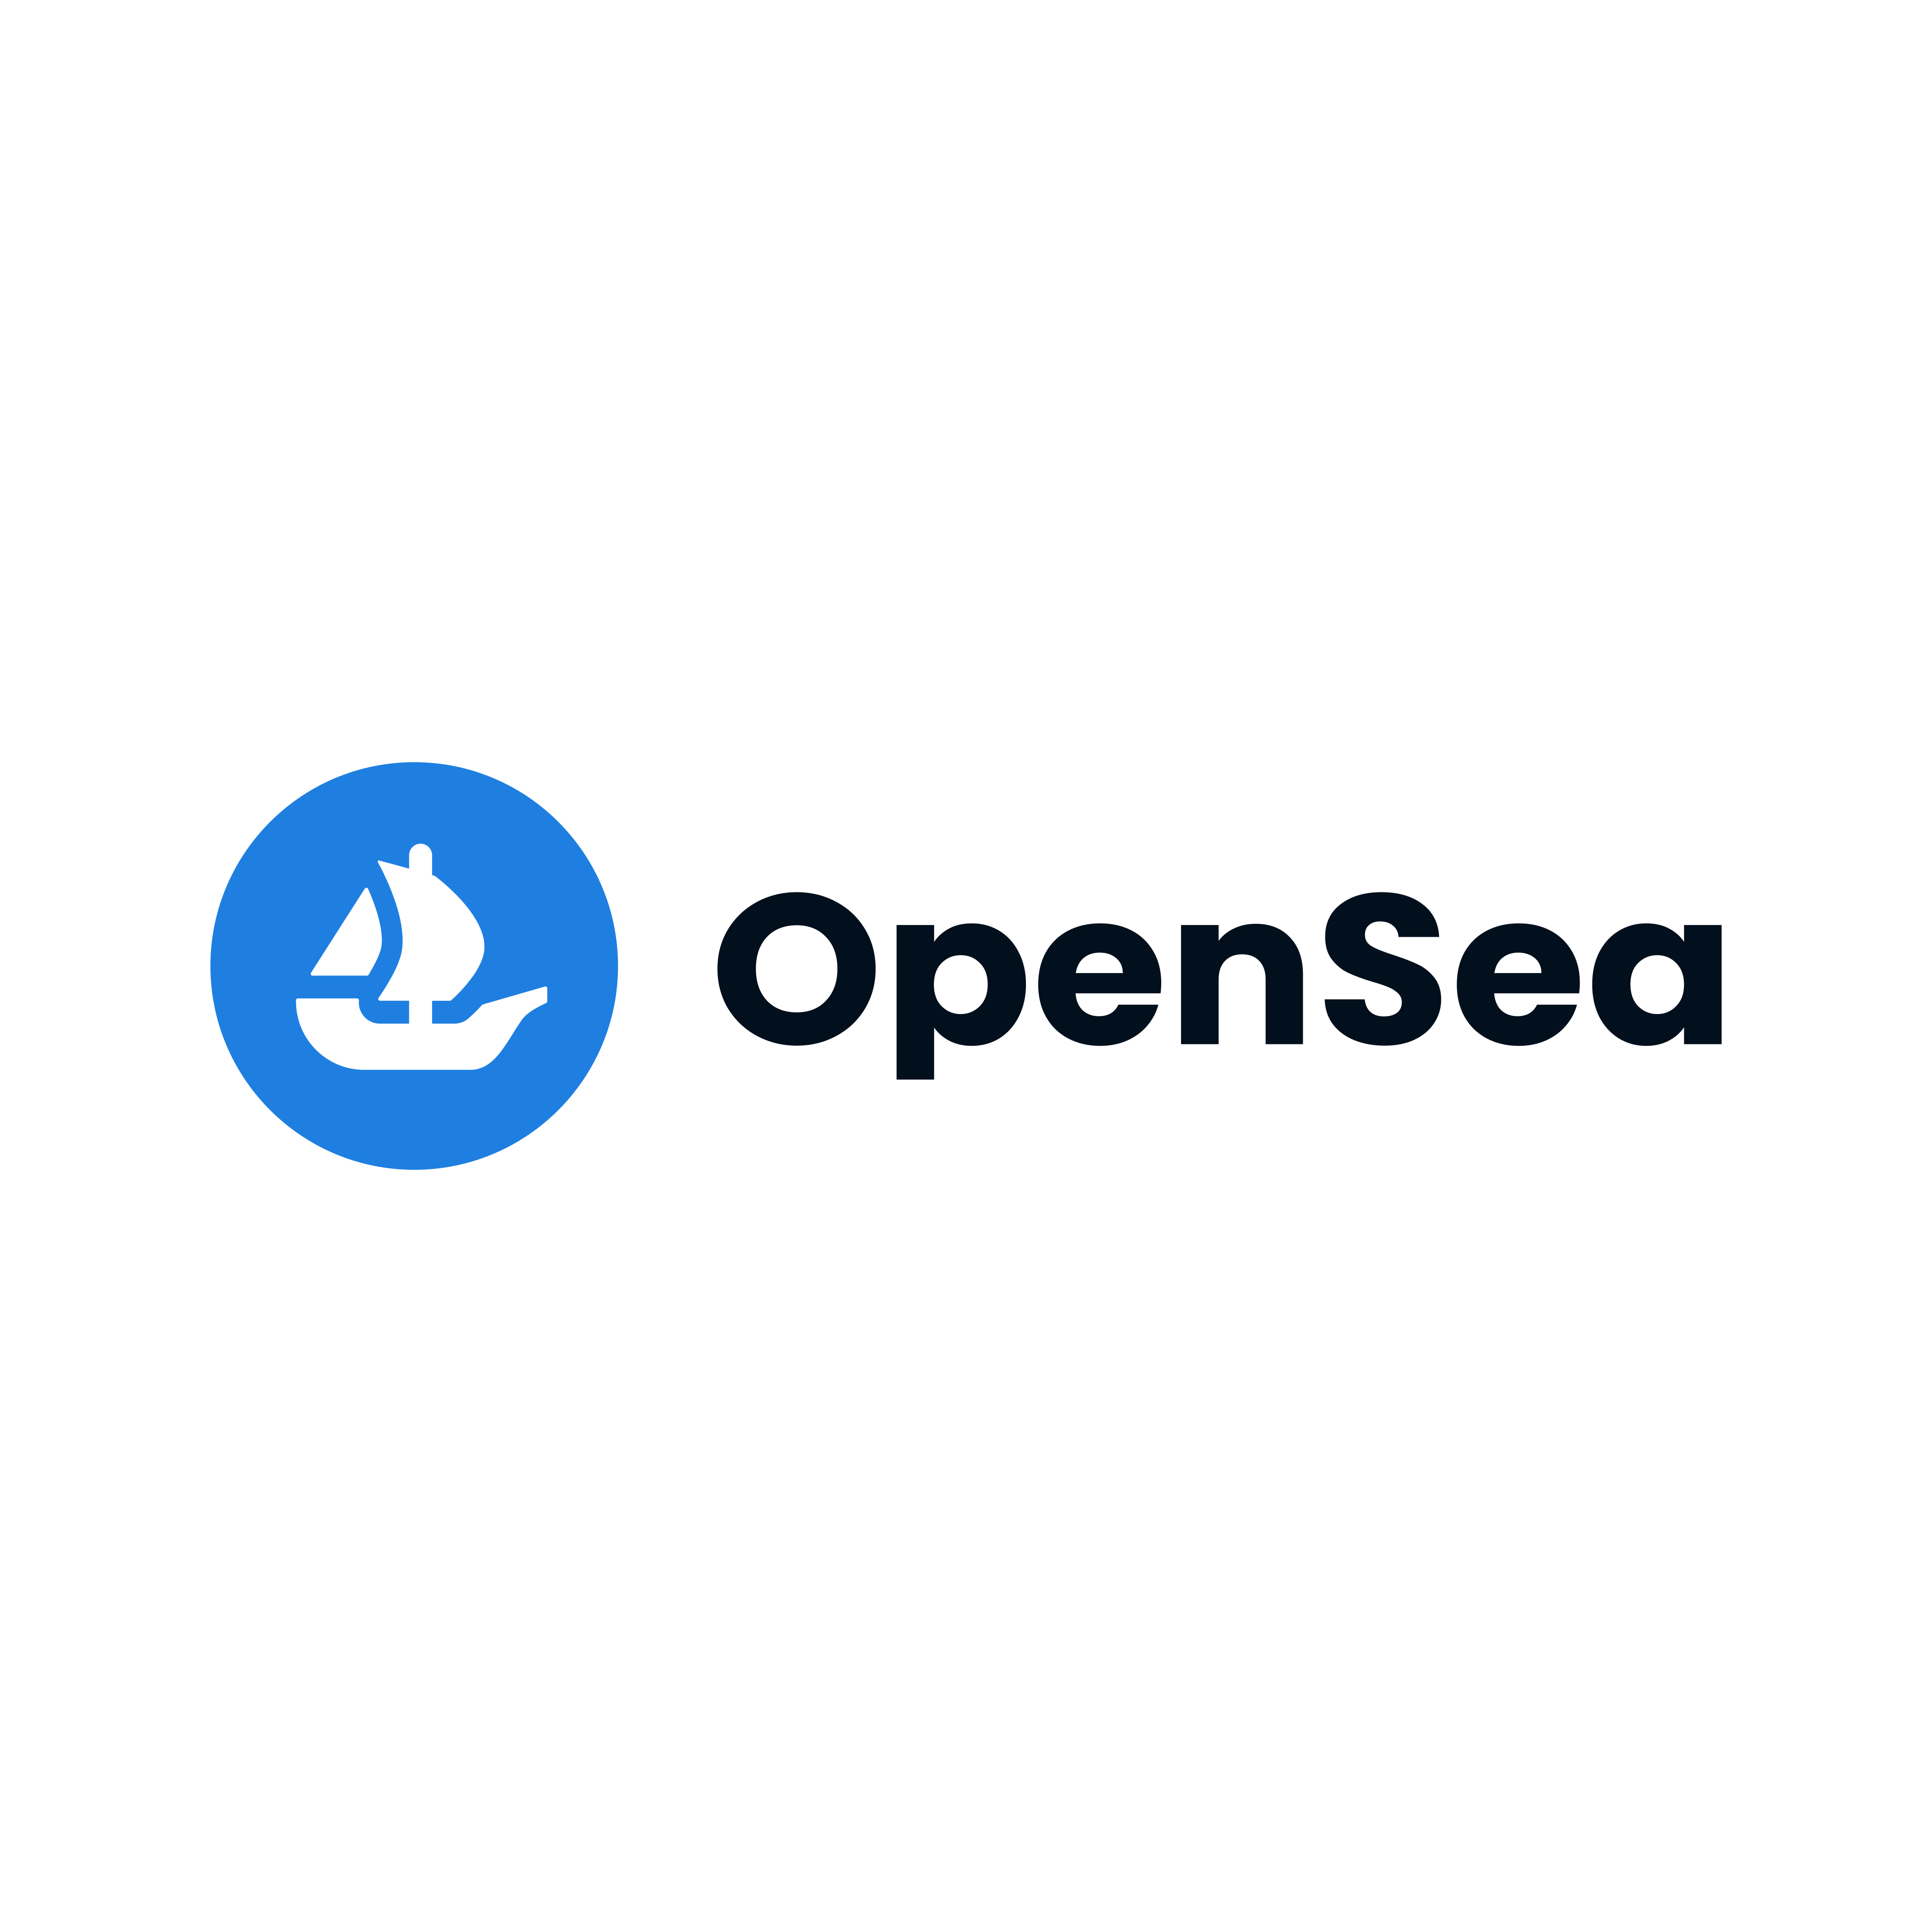 OpenSea Logo PNG.